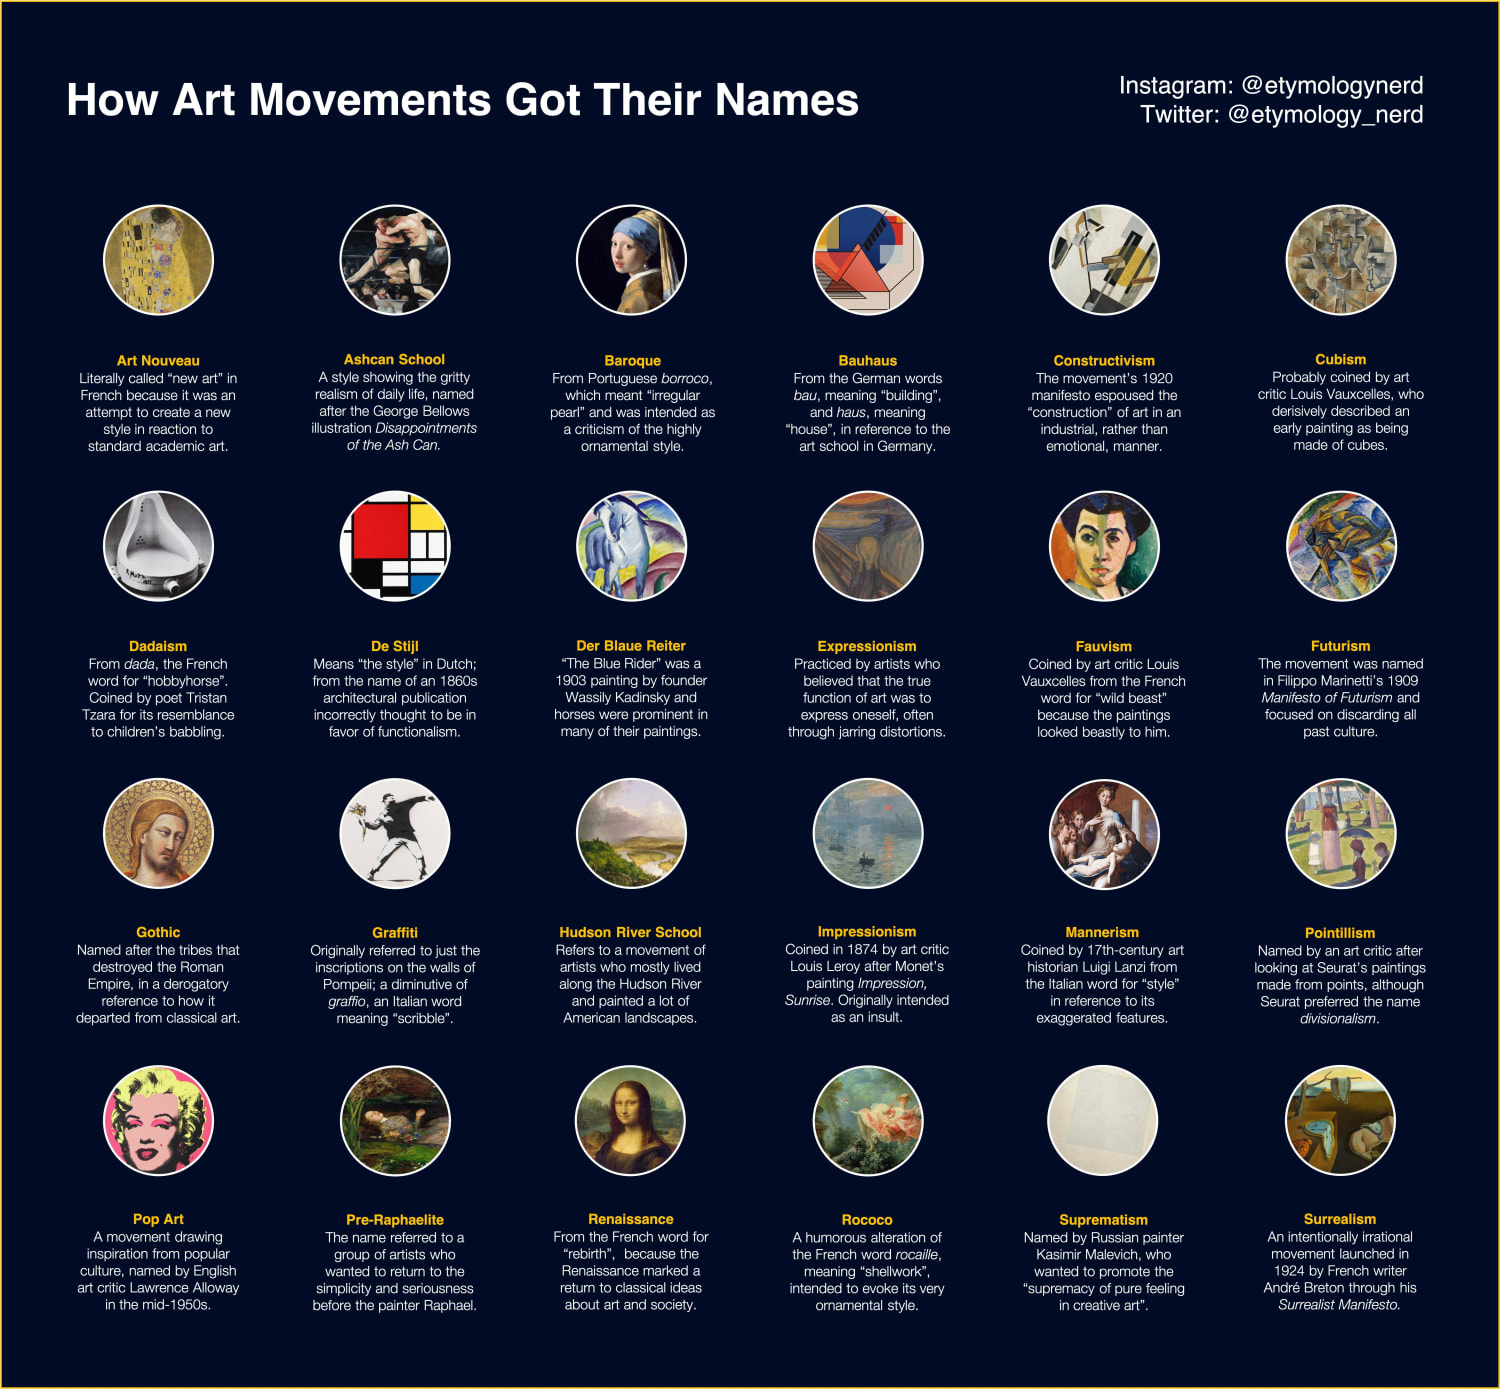 I made a guide explaining how art movements got their names